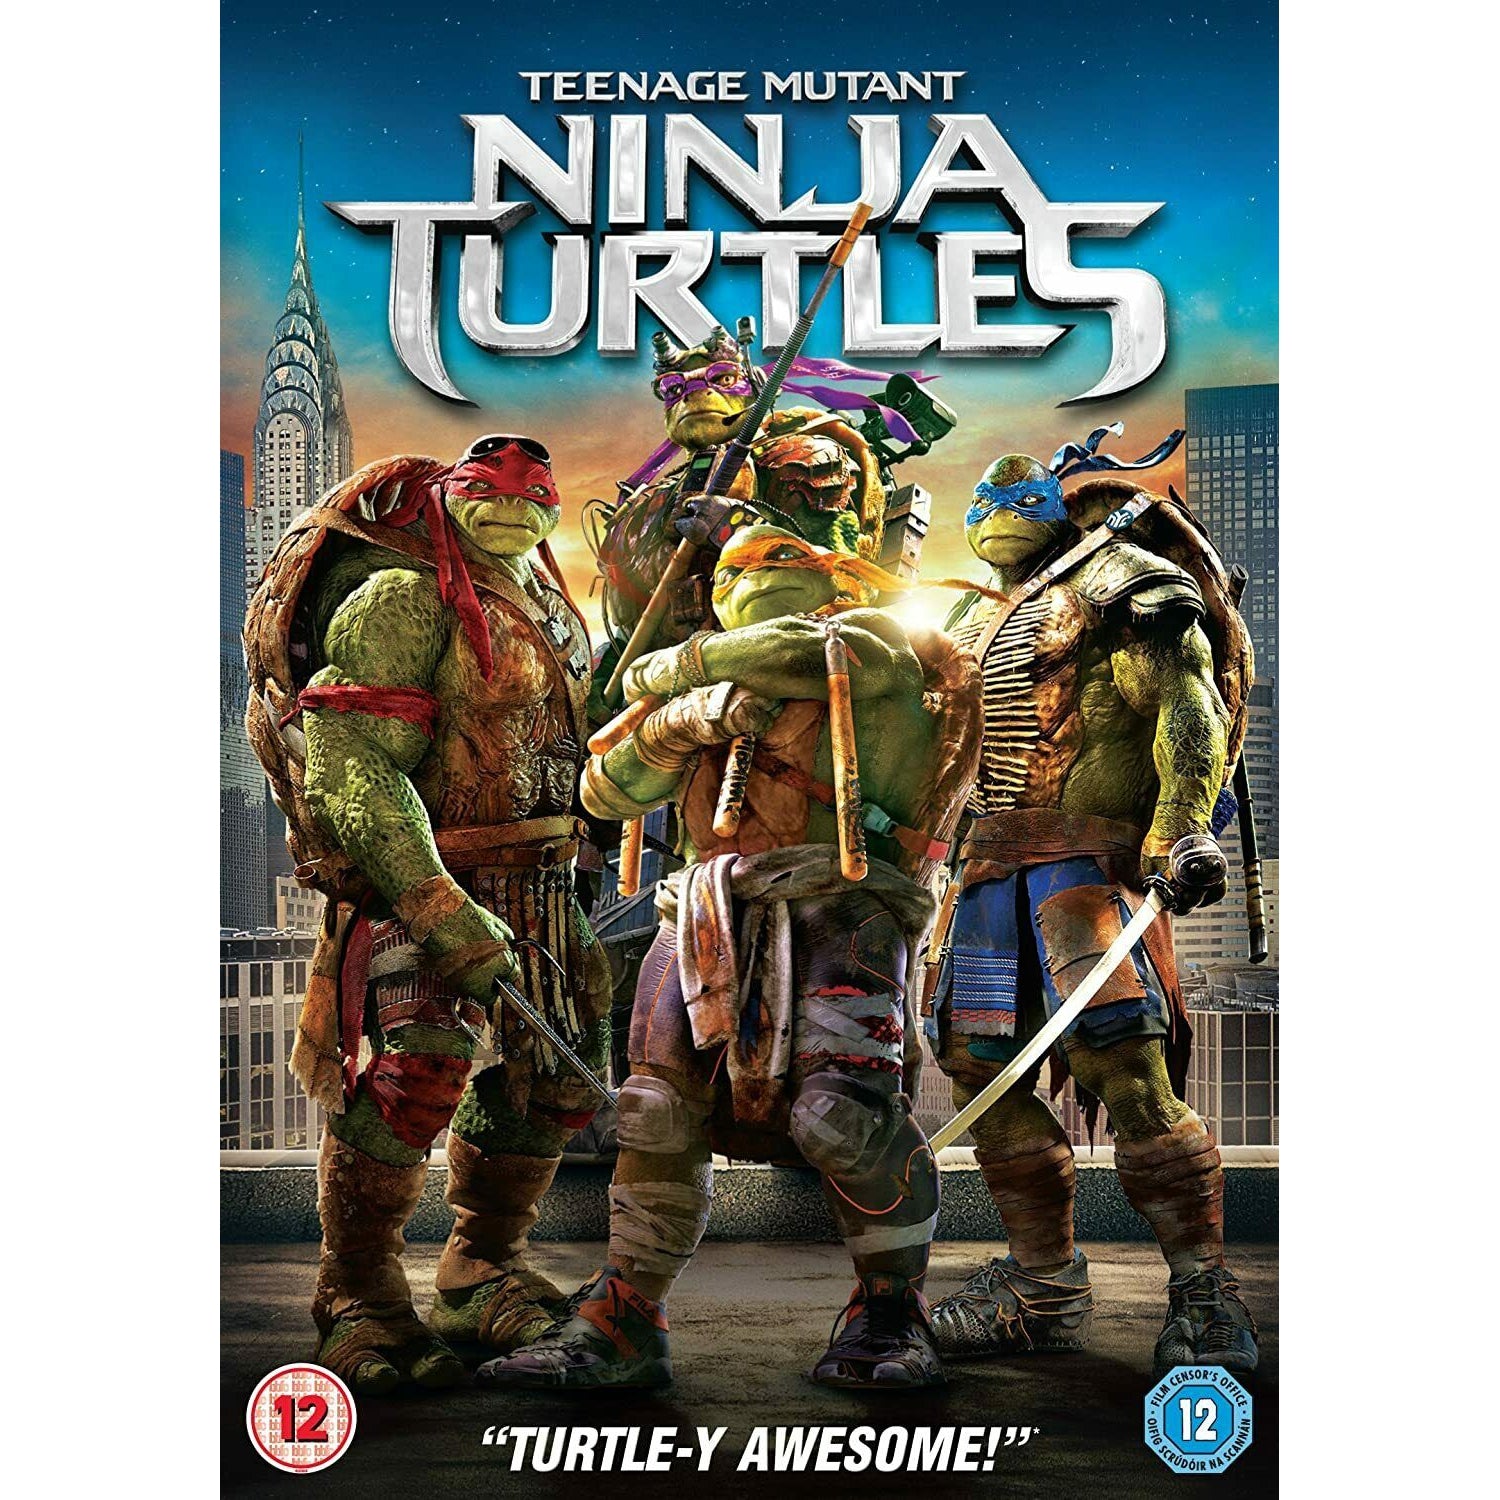 Teenage Mutant Ninja Turtles Blu-ray/DVD - Brand New - Fast and Free Delivery